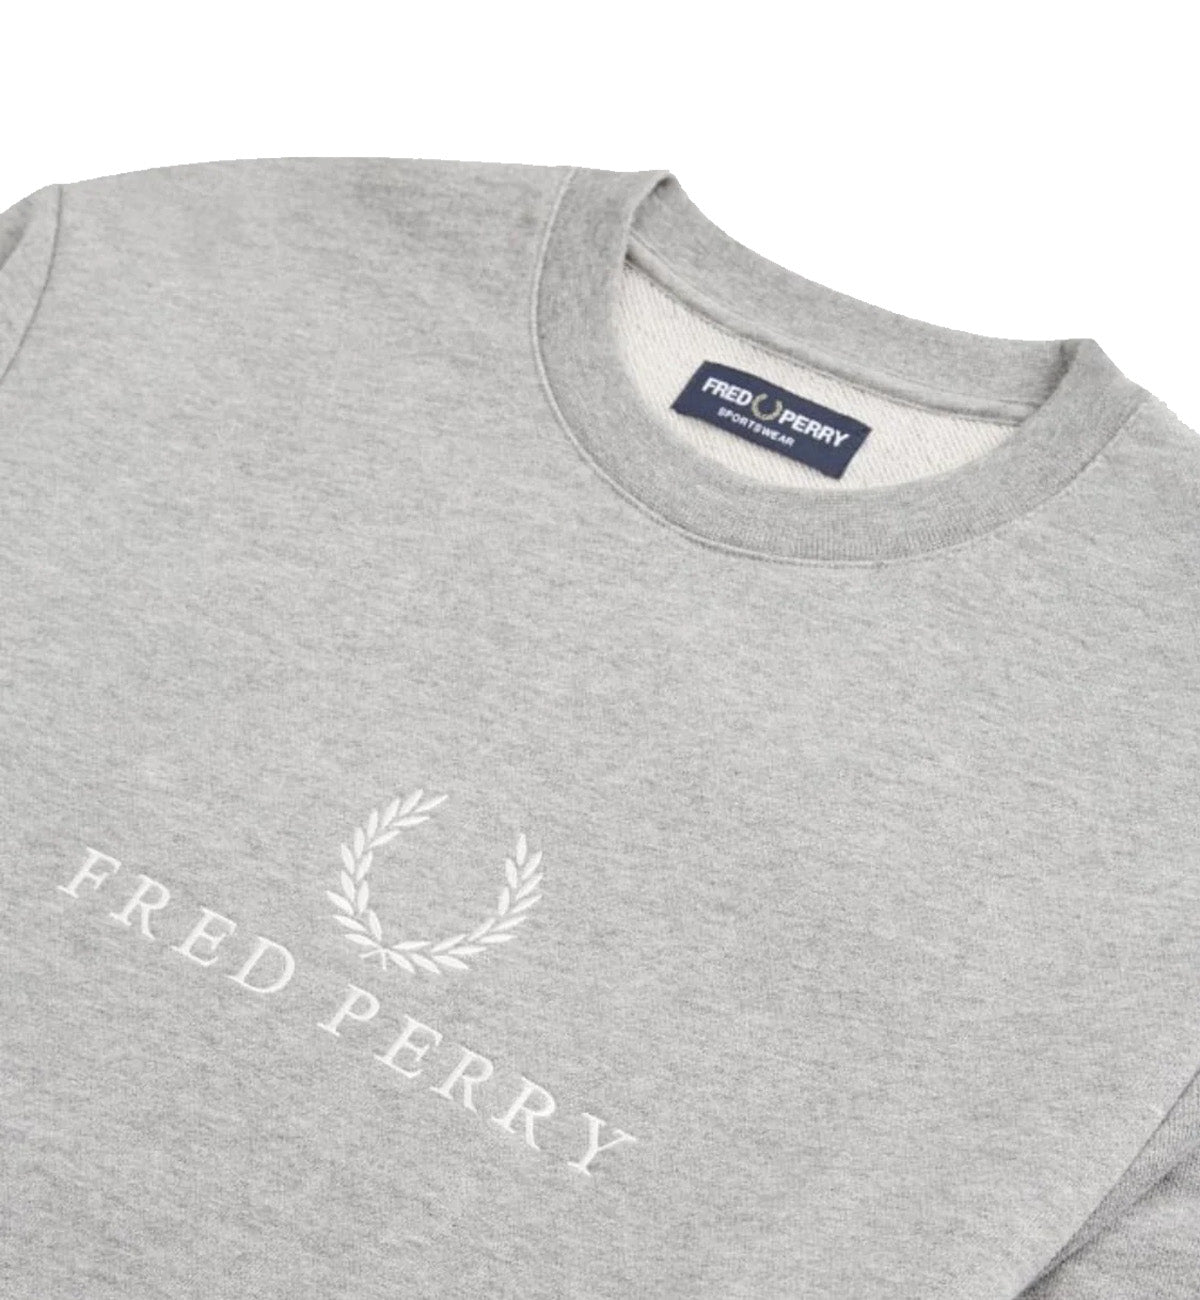 Fred Perry Sweatshirt (Steel Grey Marl)